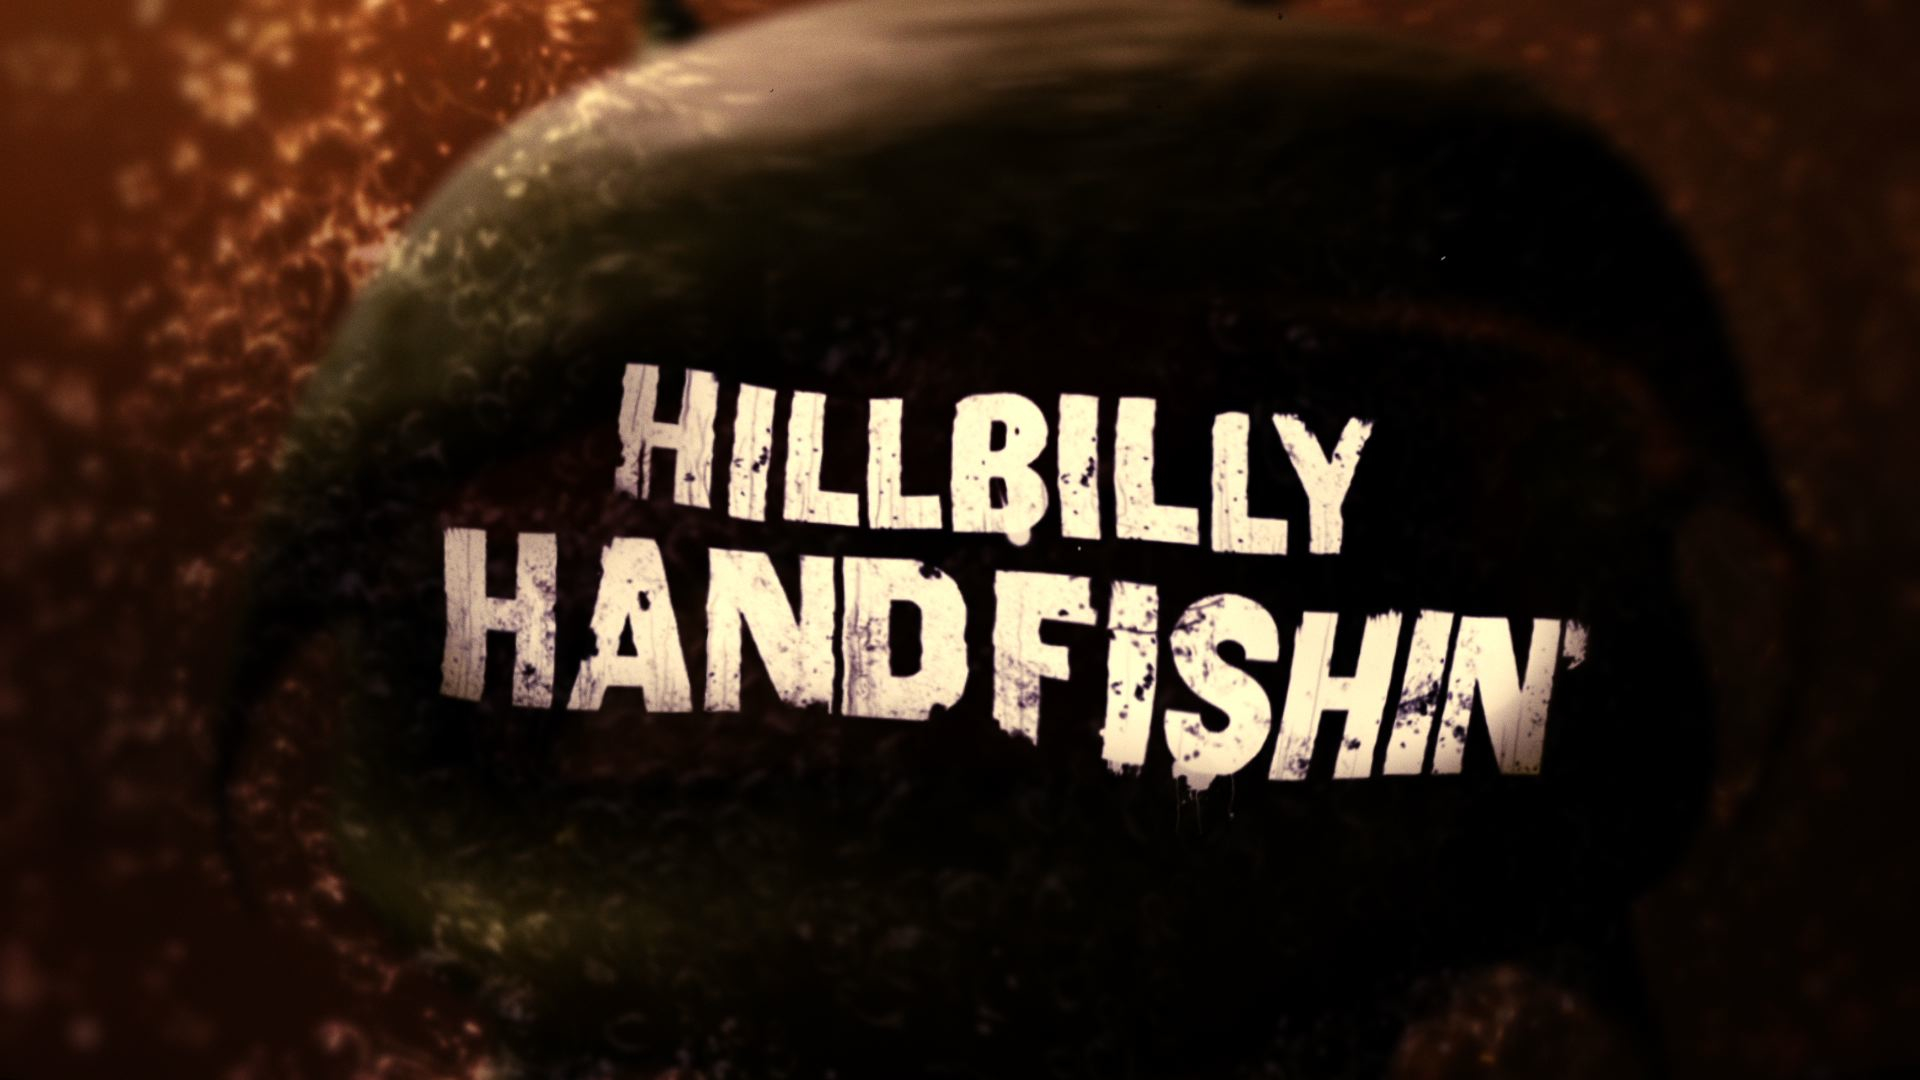 Hillbilly Handfishin' new attack title package!